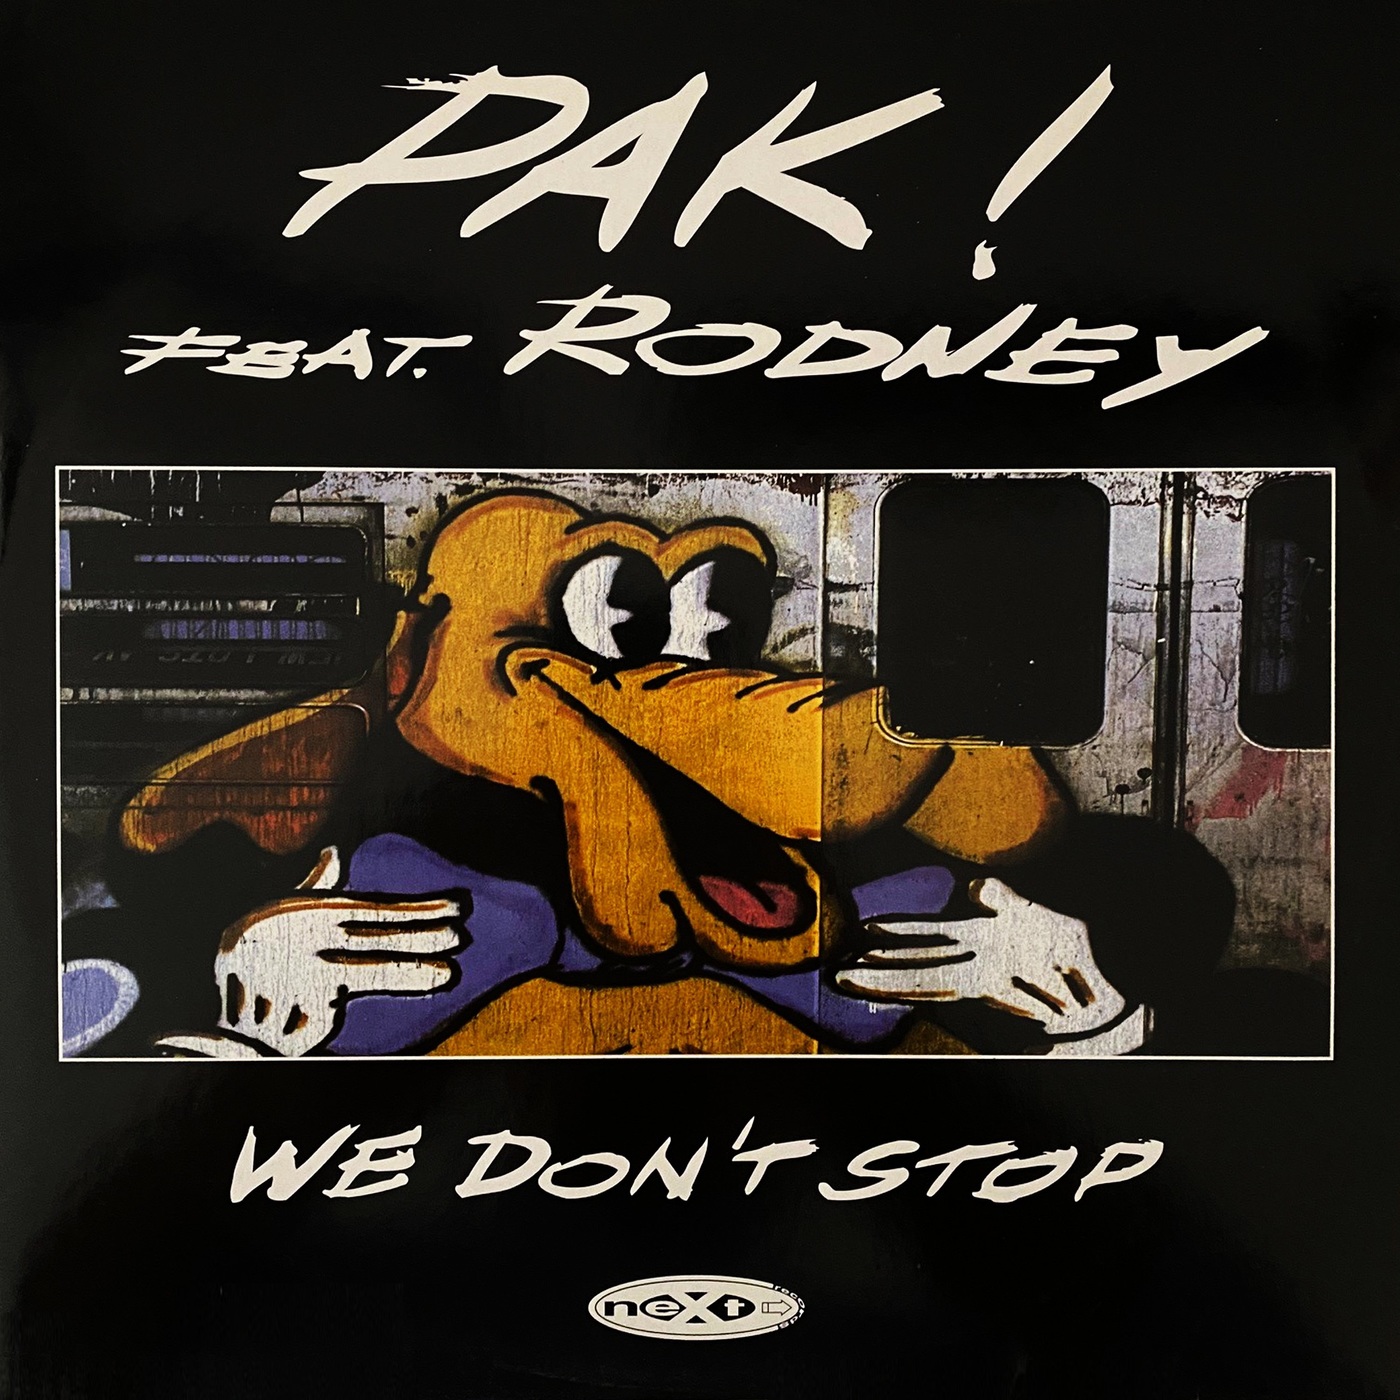 PAK! Feat. Rodney - We Don't Stop (Web Single) (1995) FLAC